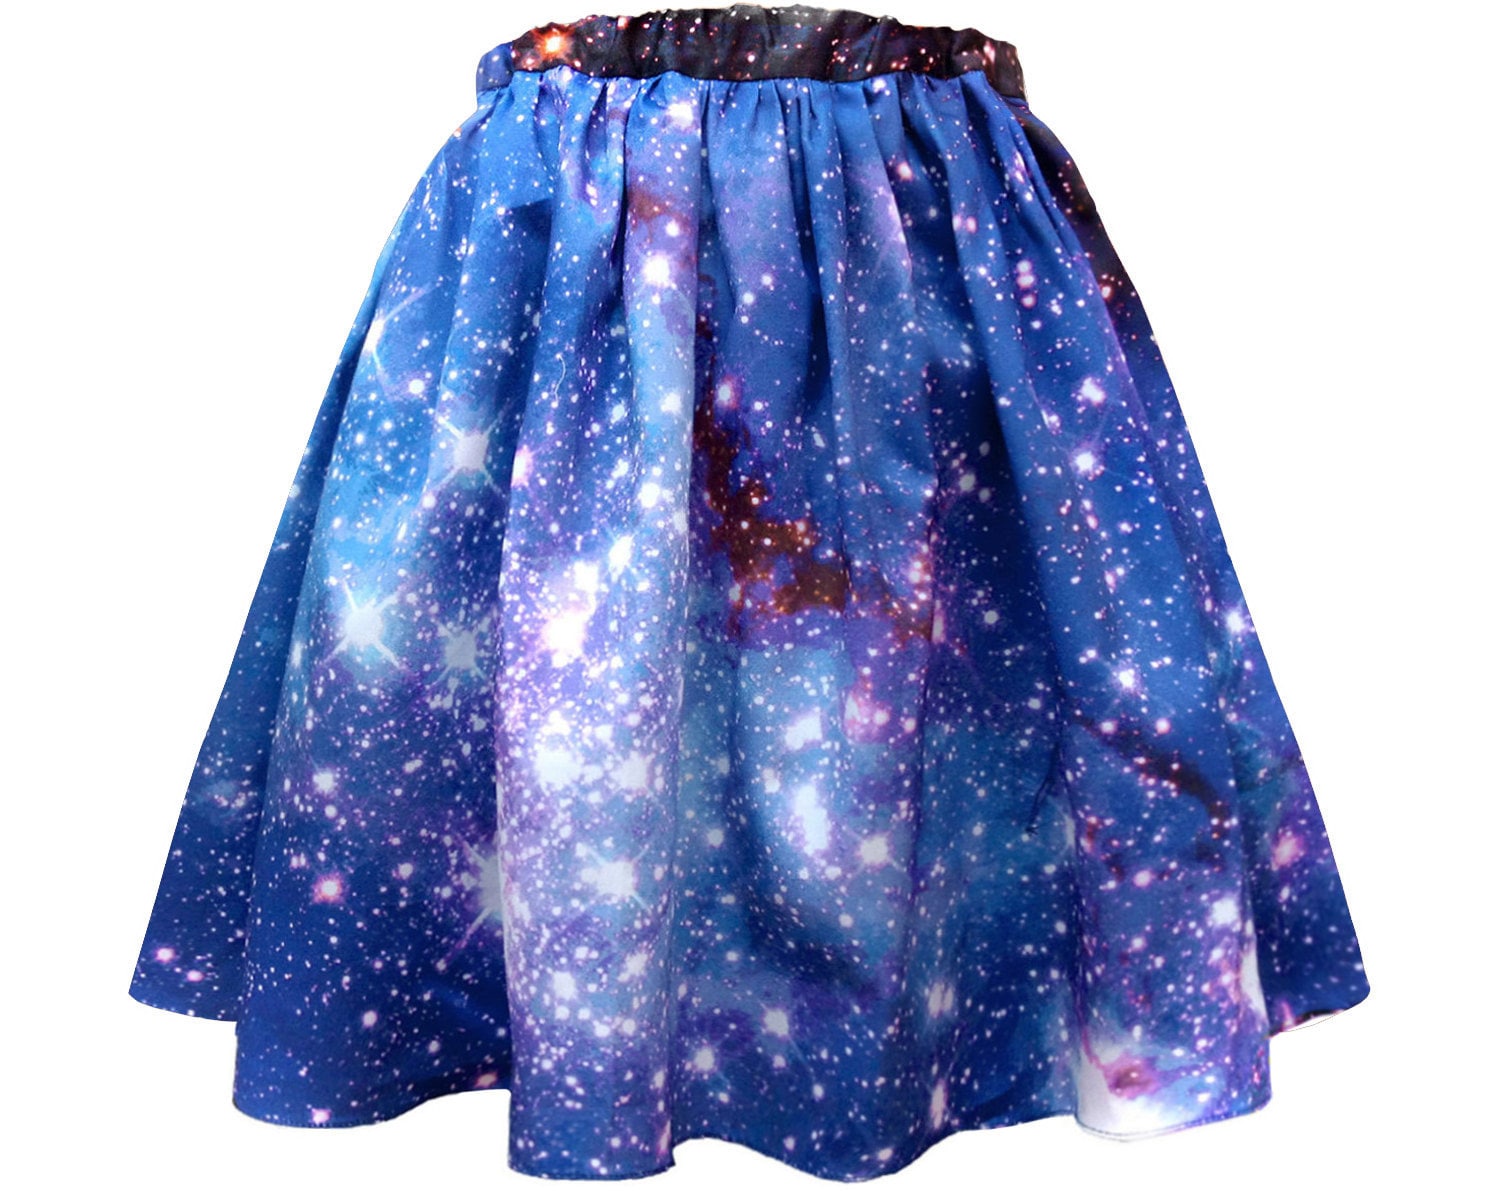 LMC Nebula Skirt Galaxy Print Organic Cotton